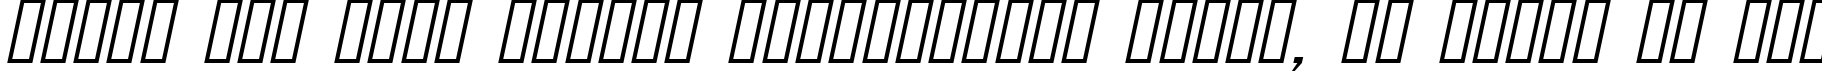 Пример написания шрифтом Pecot Oblique текста на русском